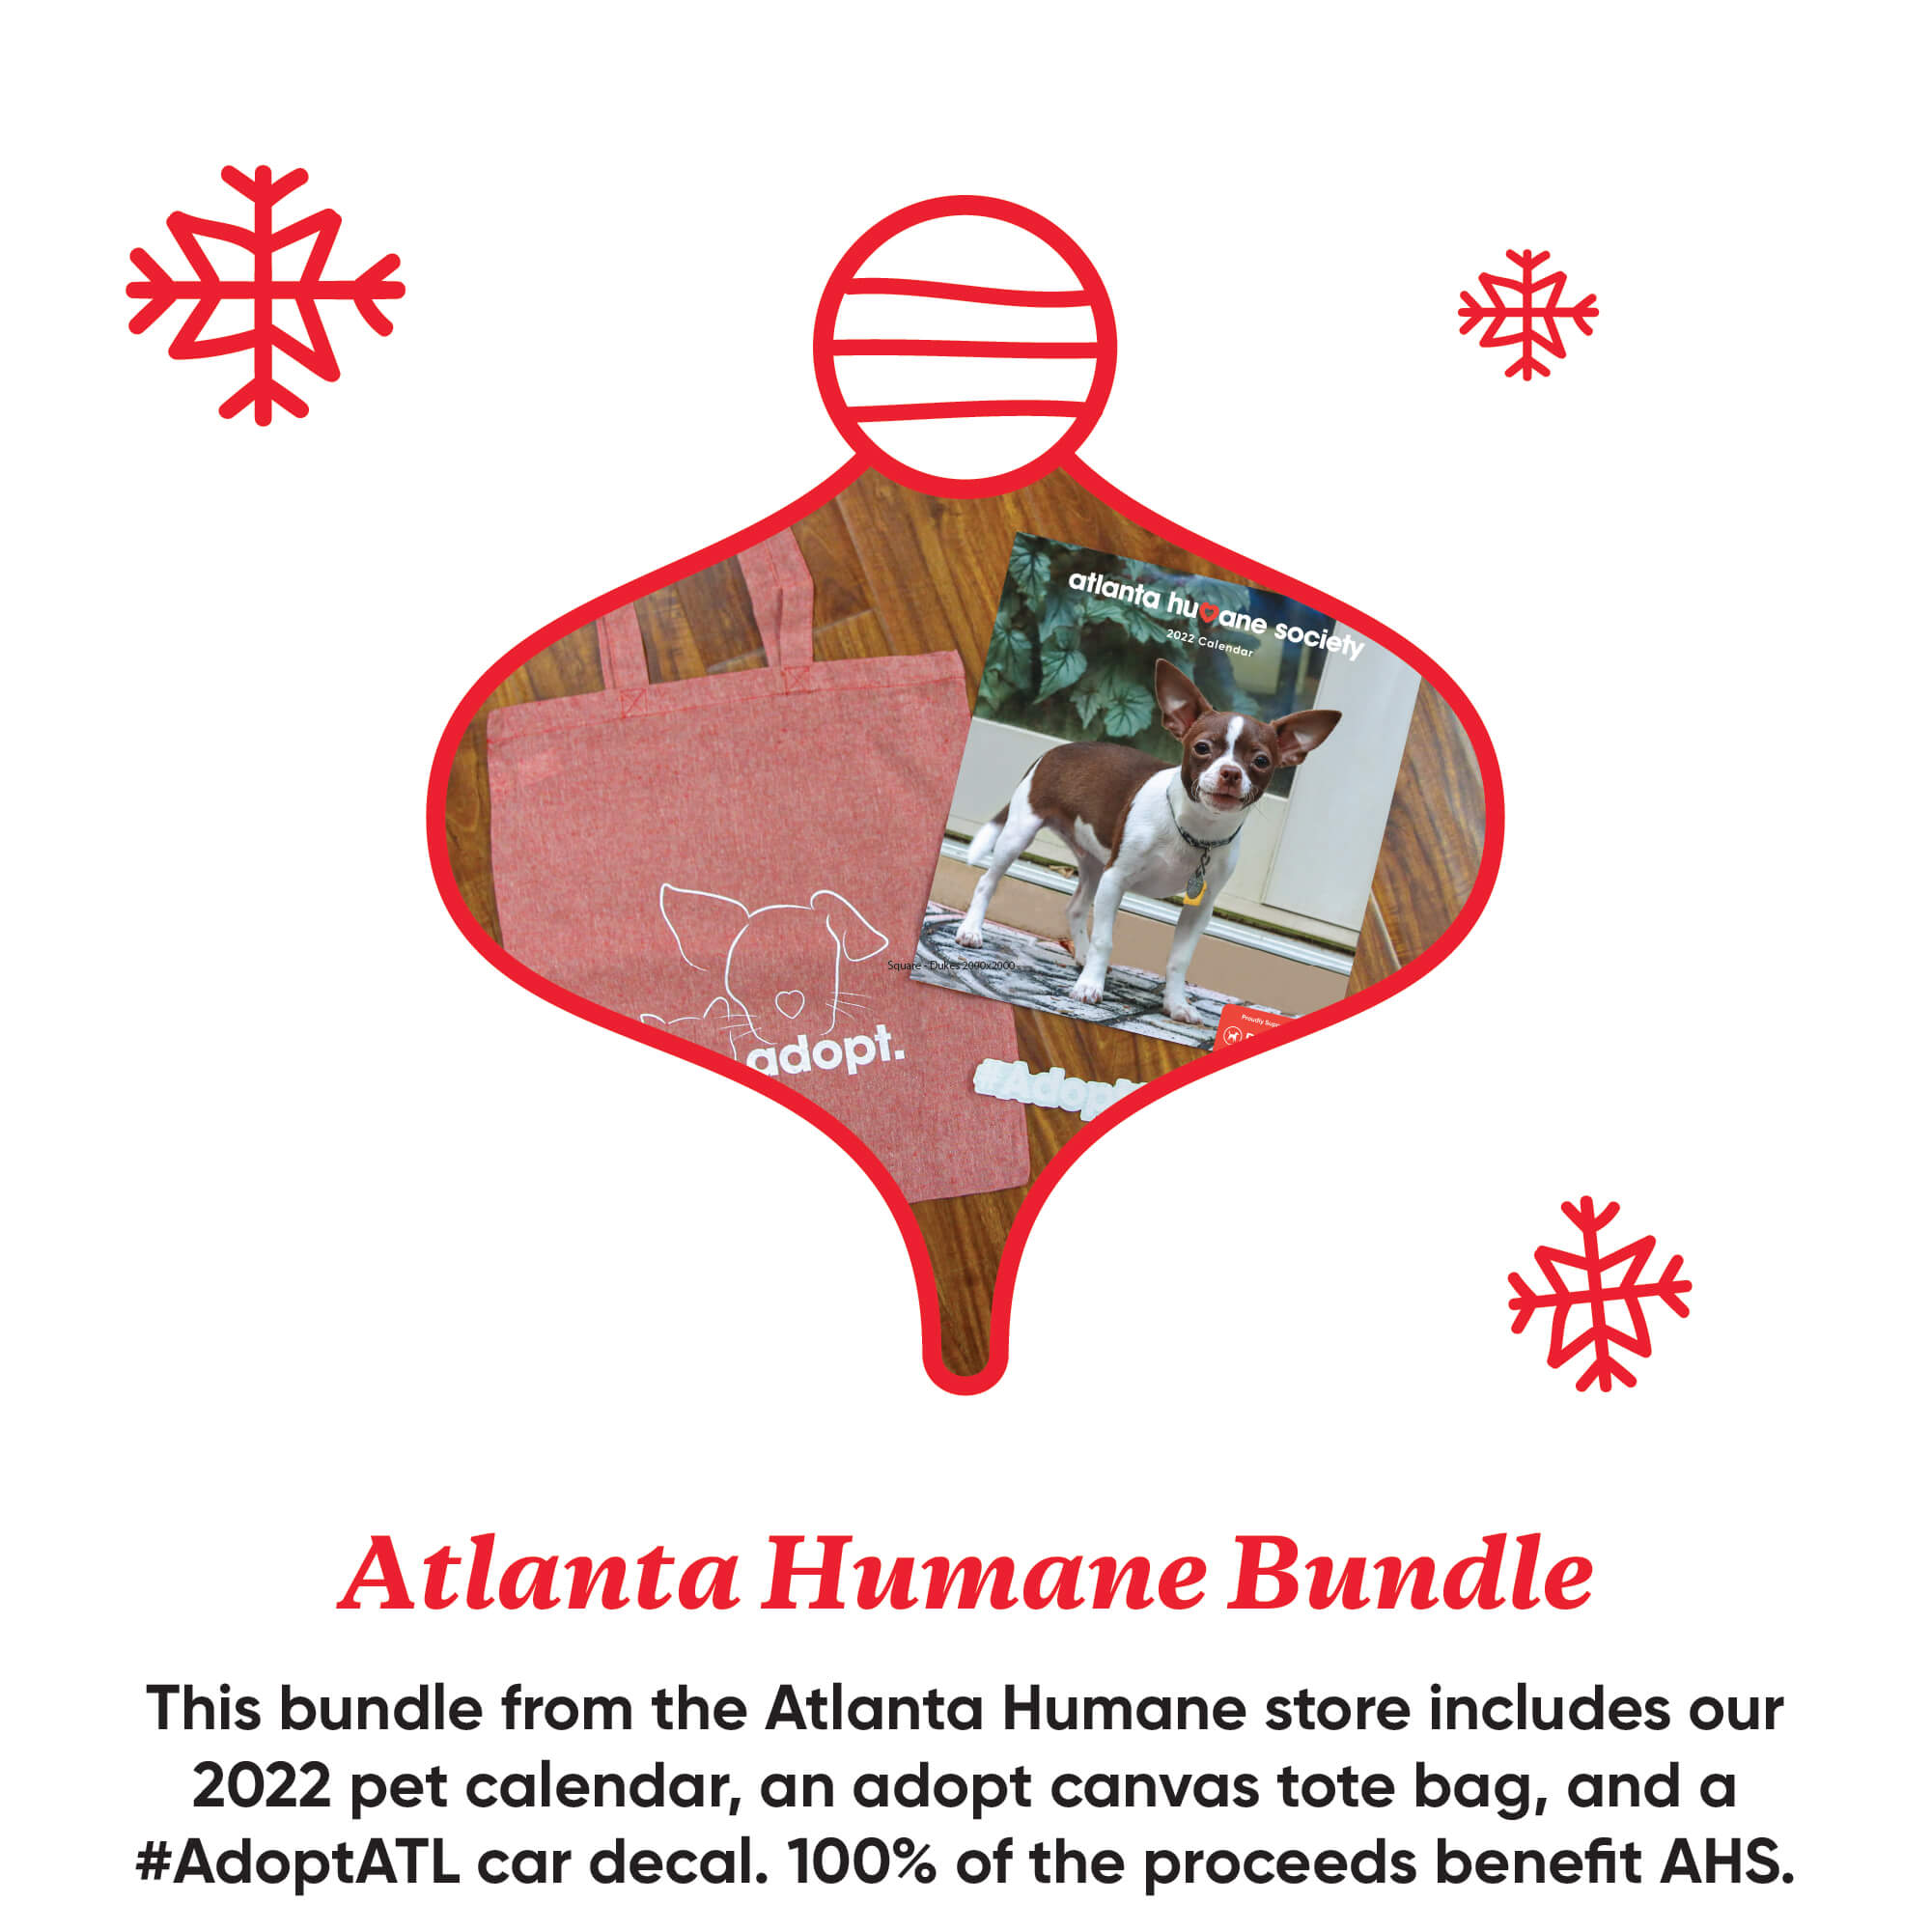 2021 holiday gift guide atlanta humane bundle